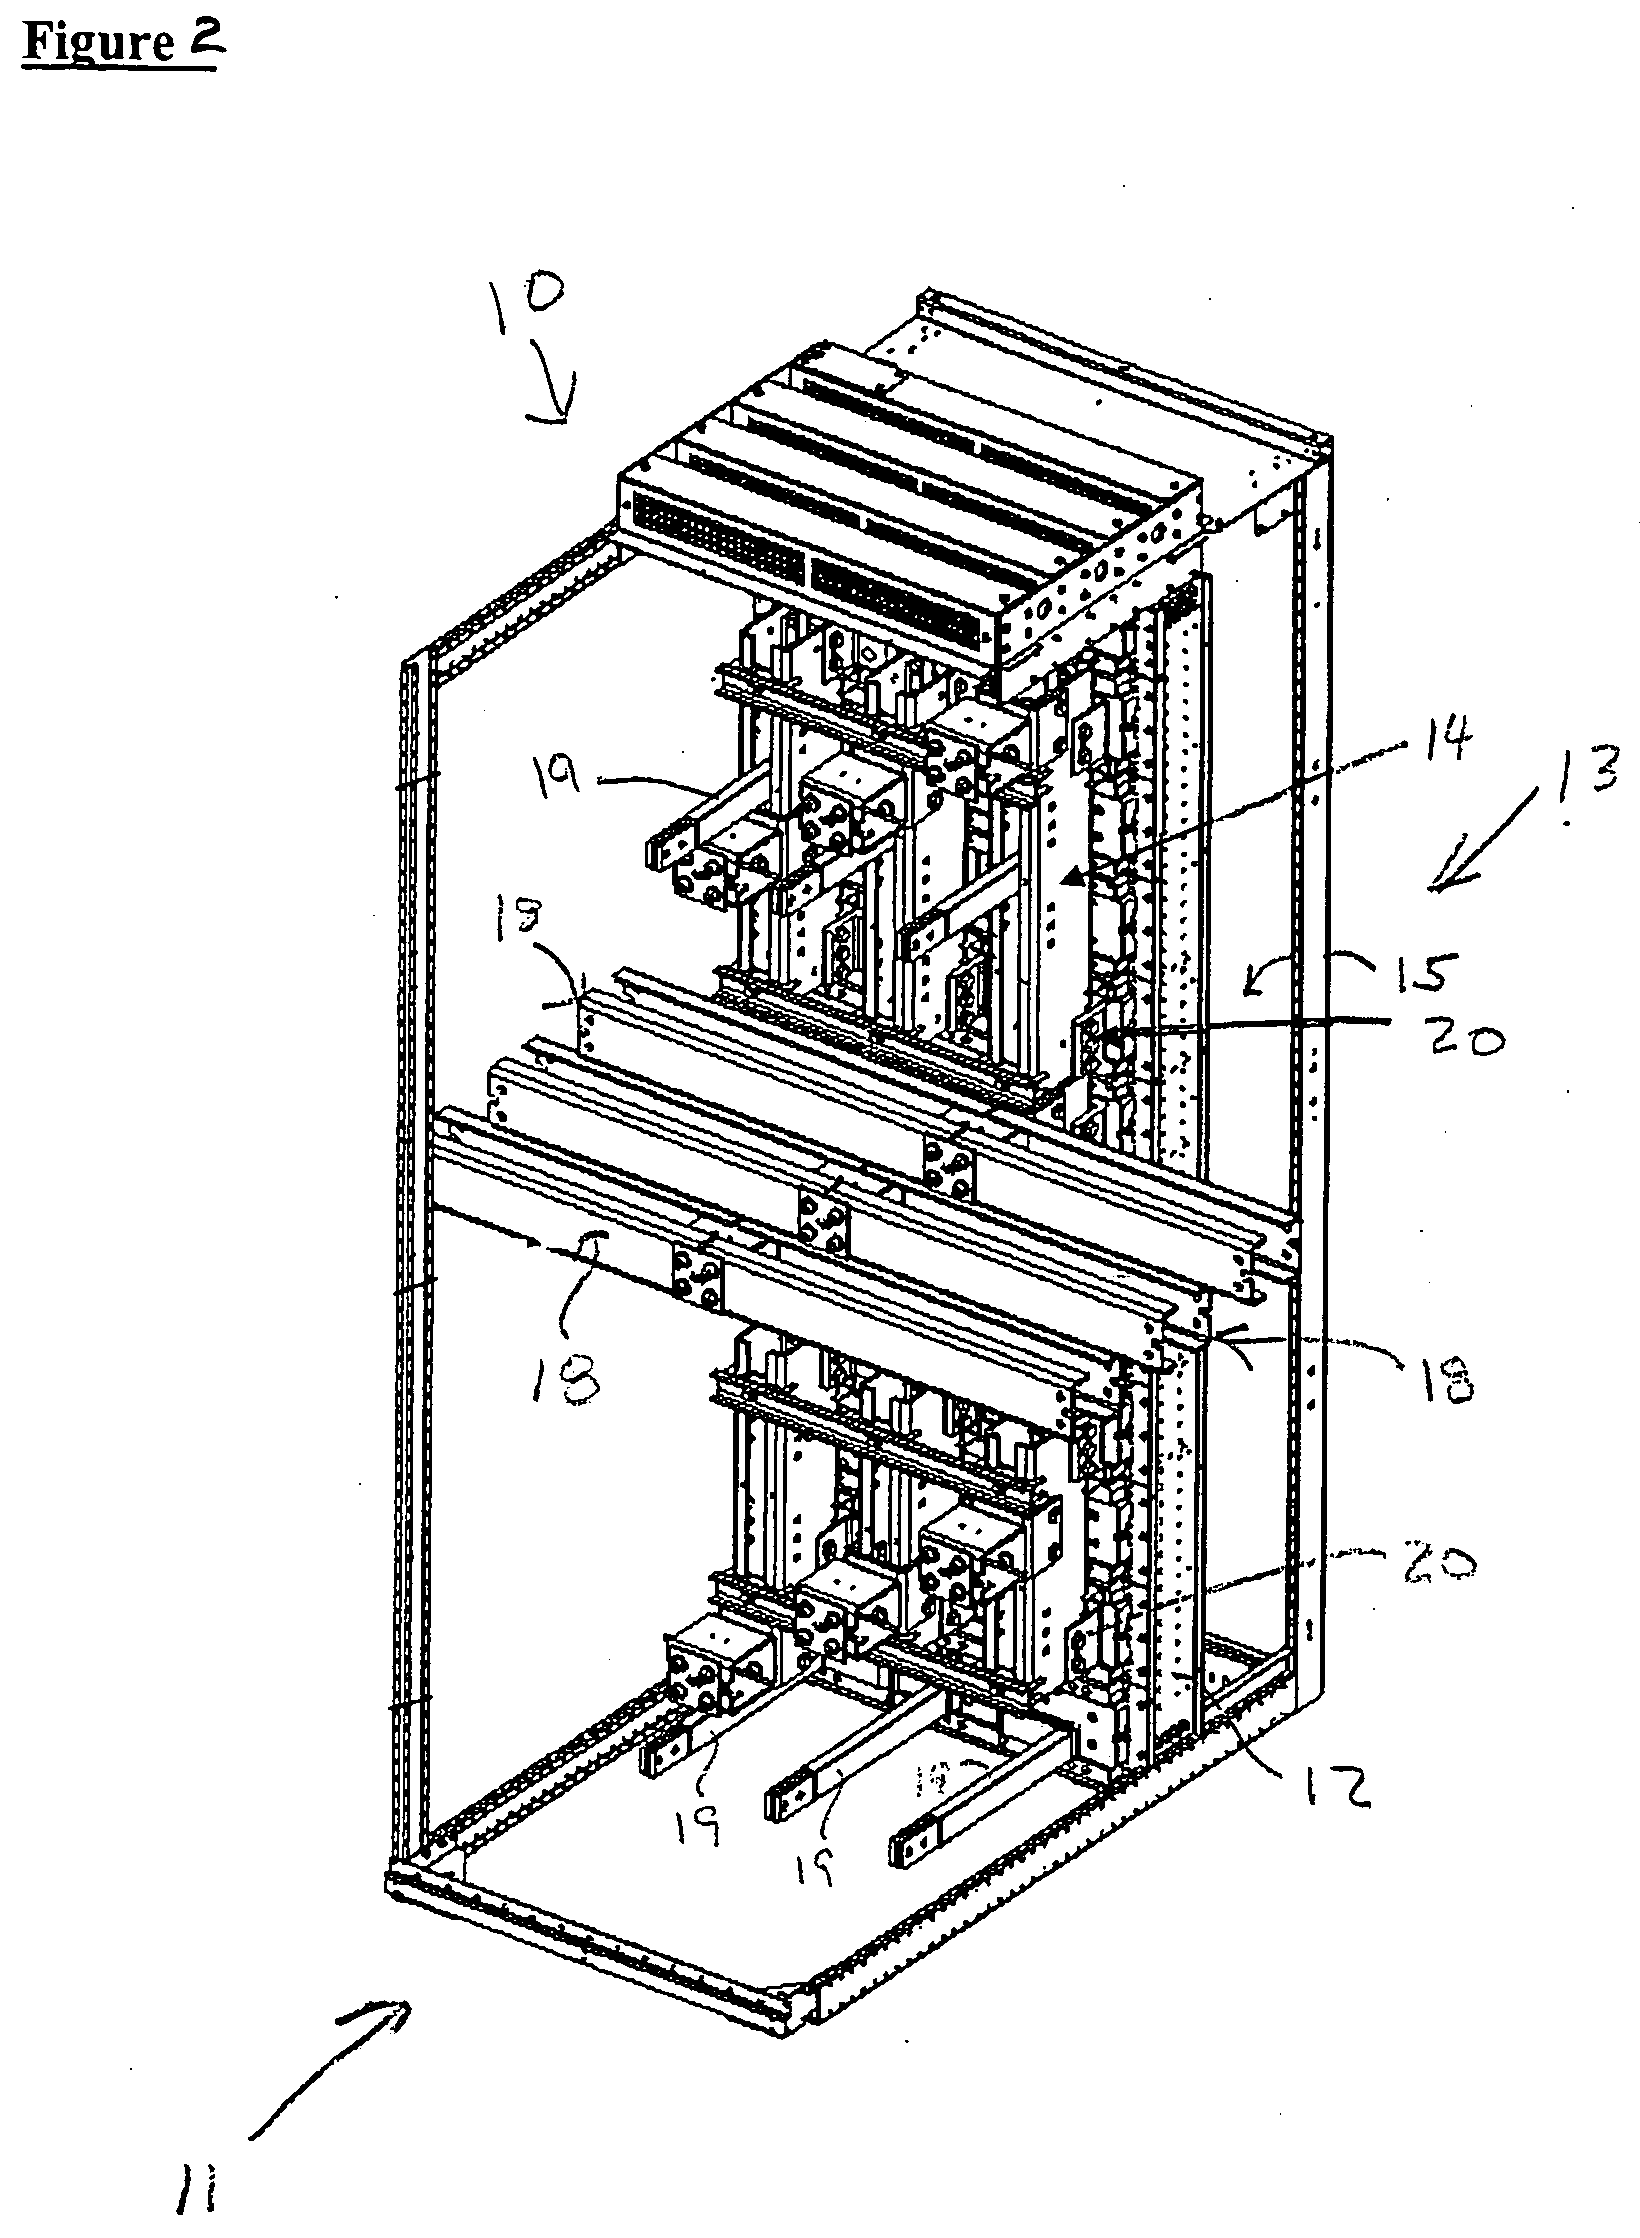 Modular arrangement of components of electrical equipment enclosure